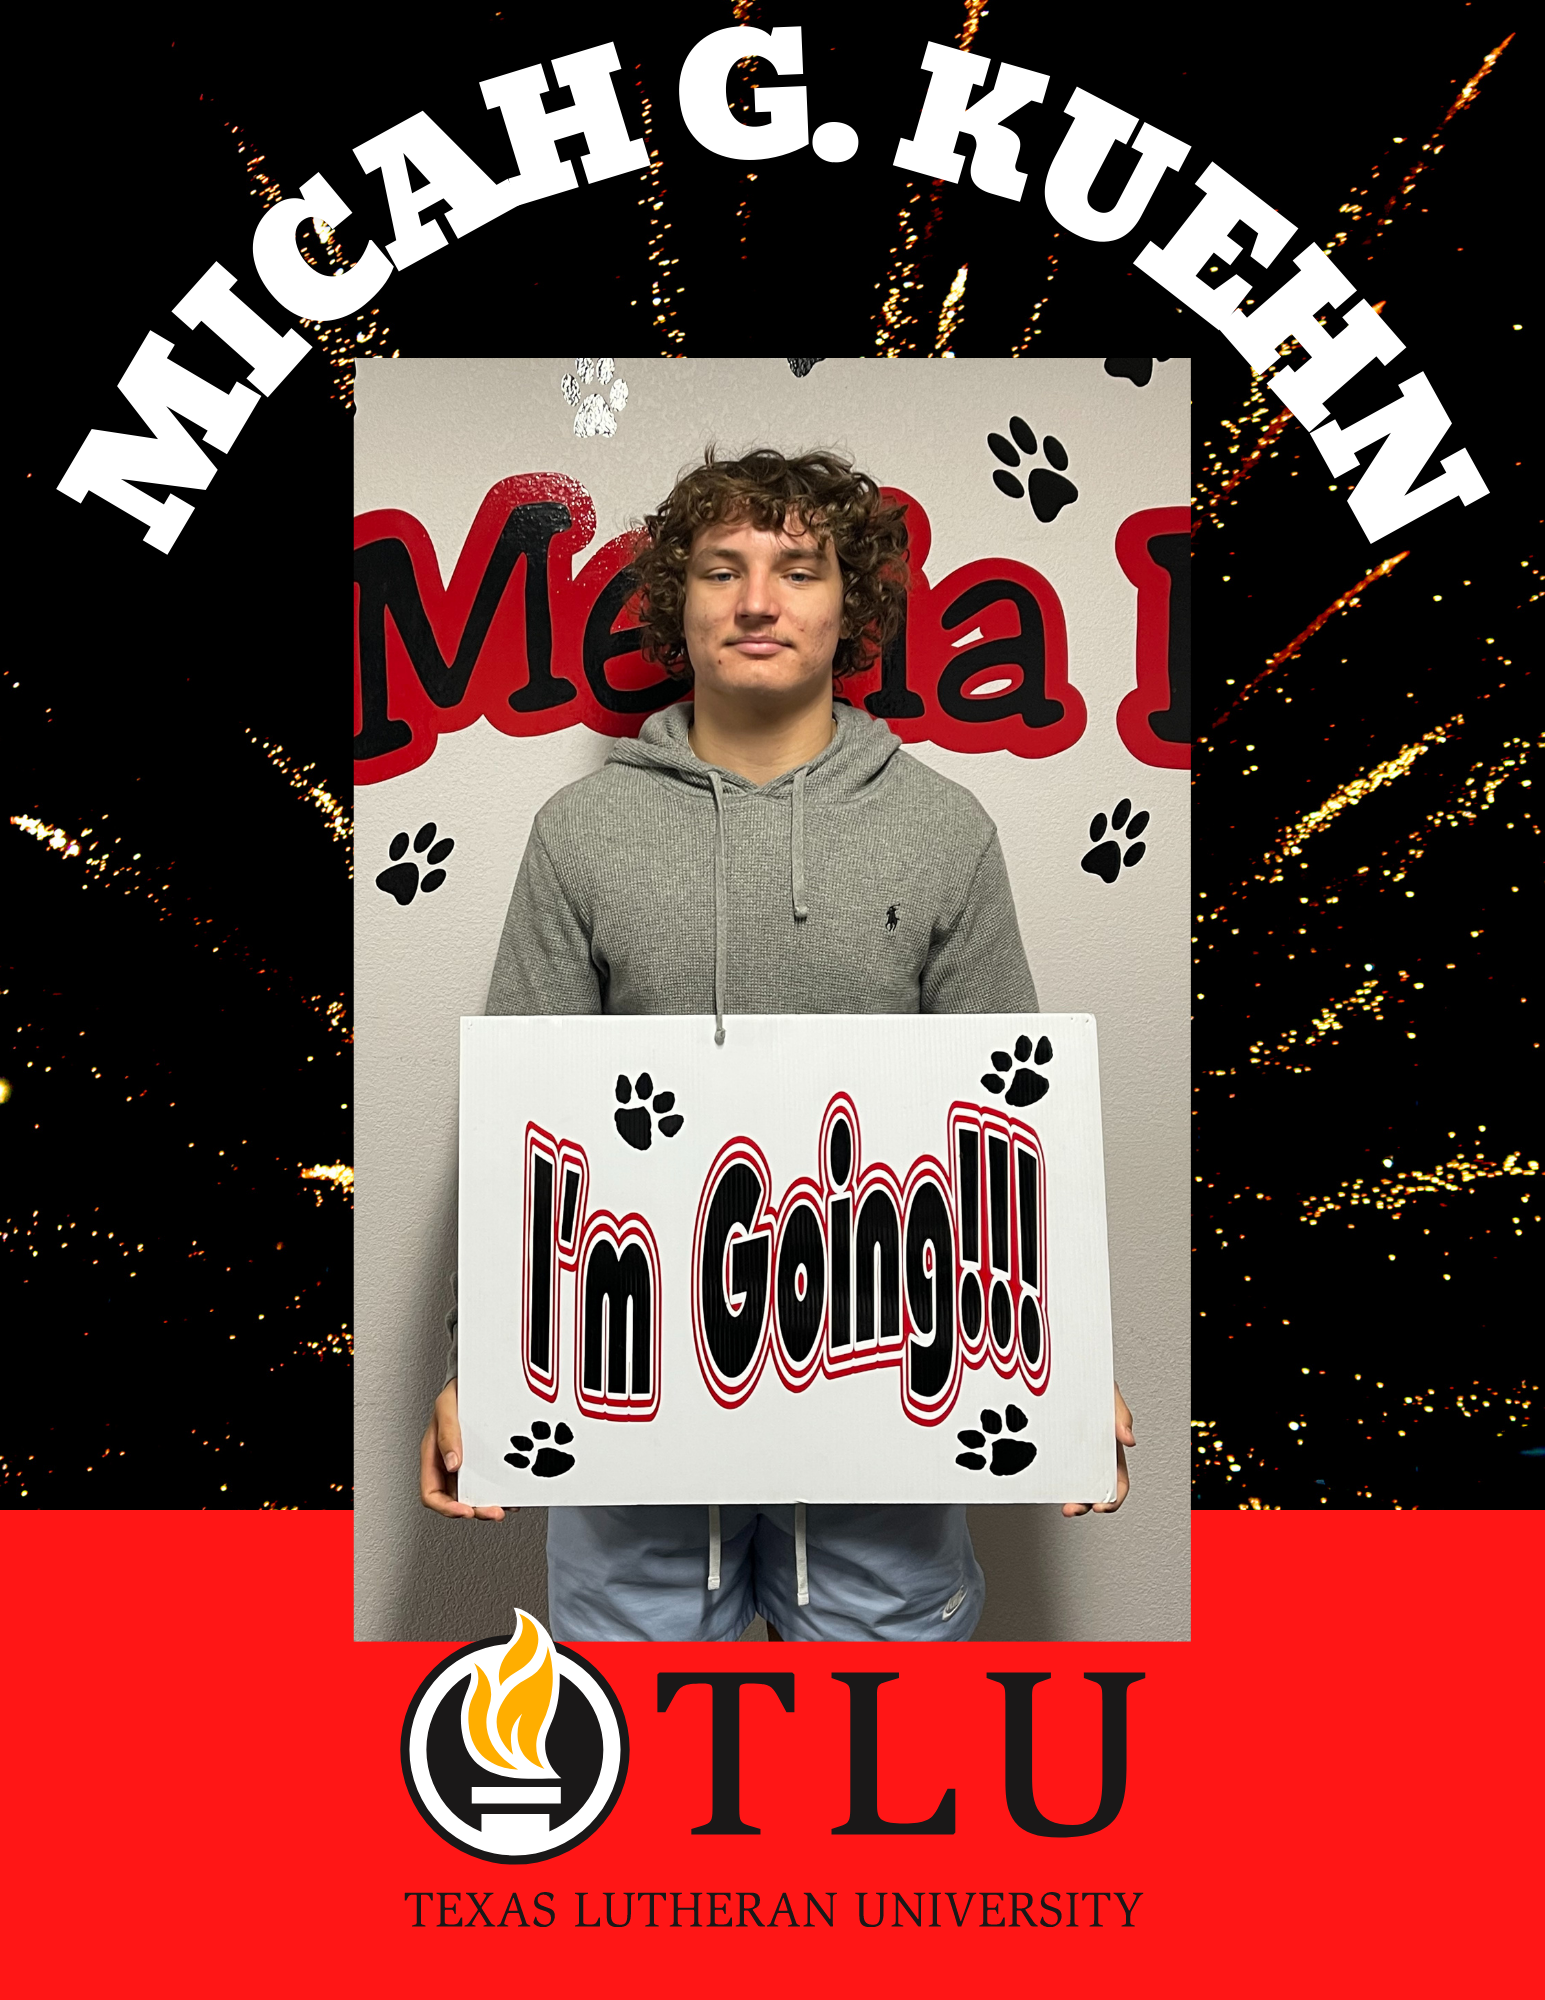 Micah G. Kuehn - I'm Going! - Texas Lutheran University